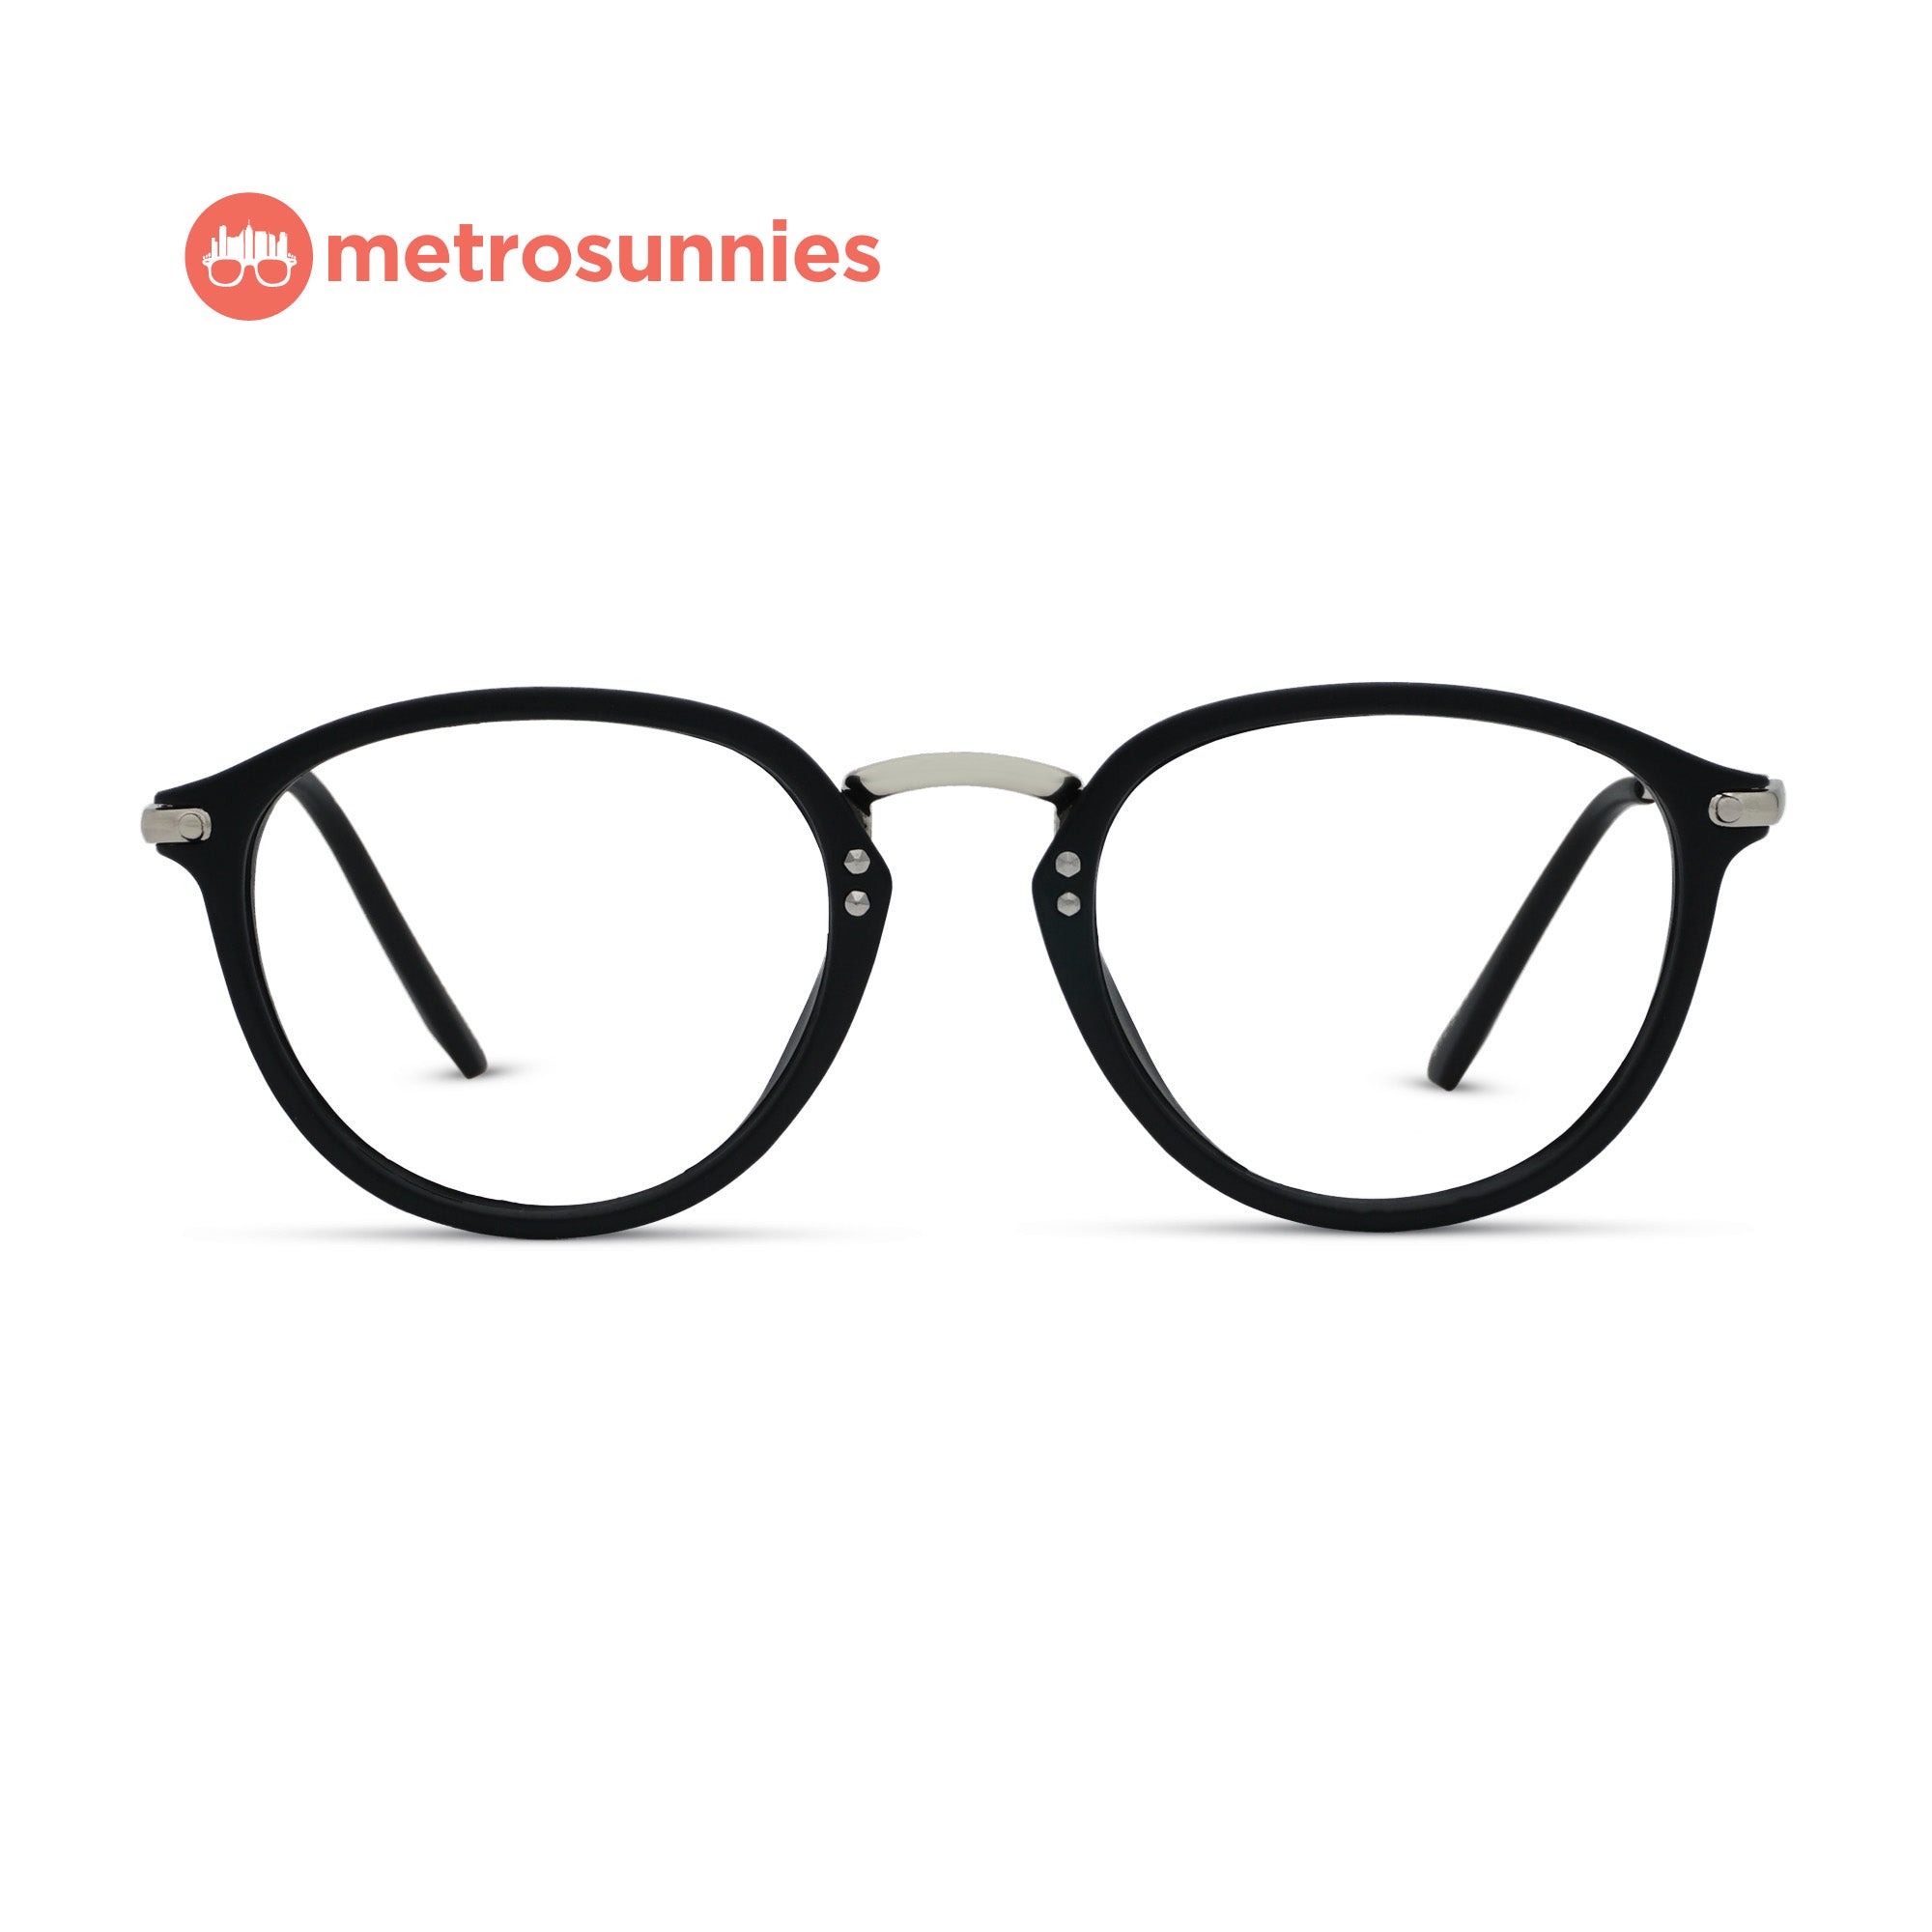 MetroSunnies Renae Specs (Black) / Replaceable Lens / Eyeglasses for Men and Women